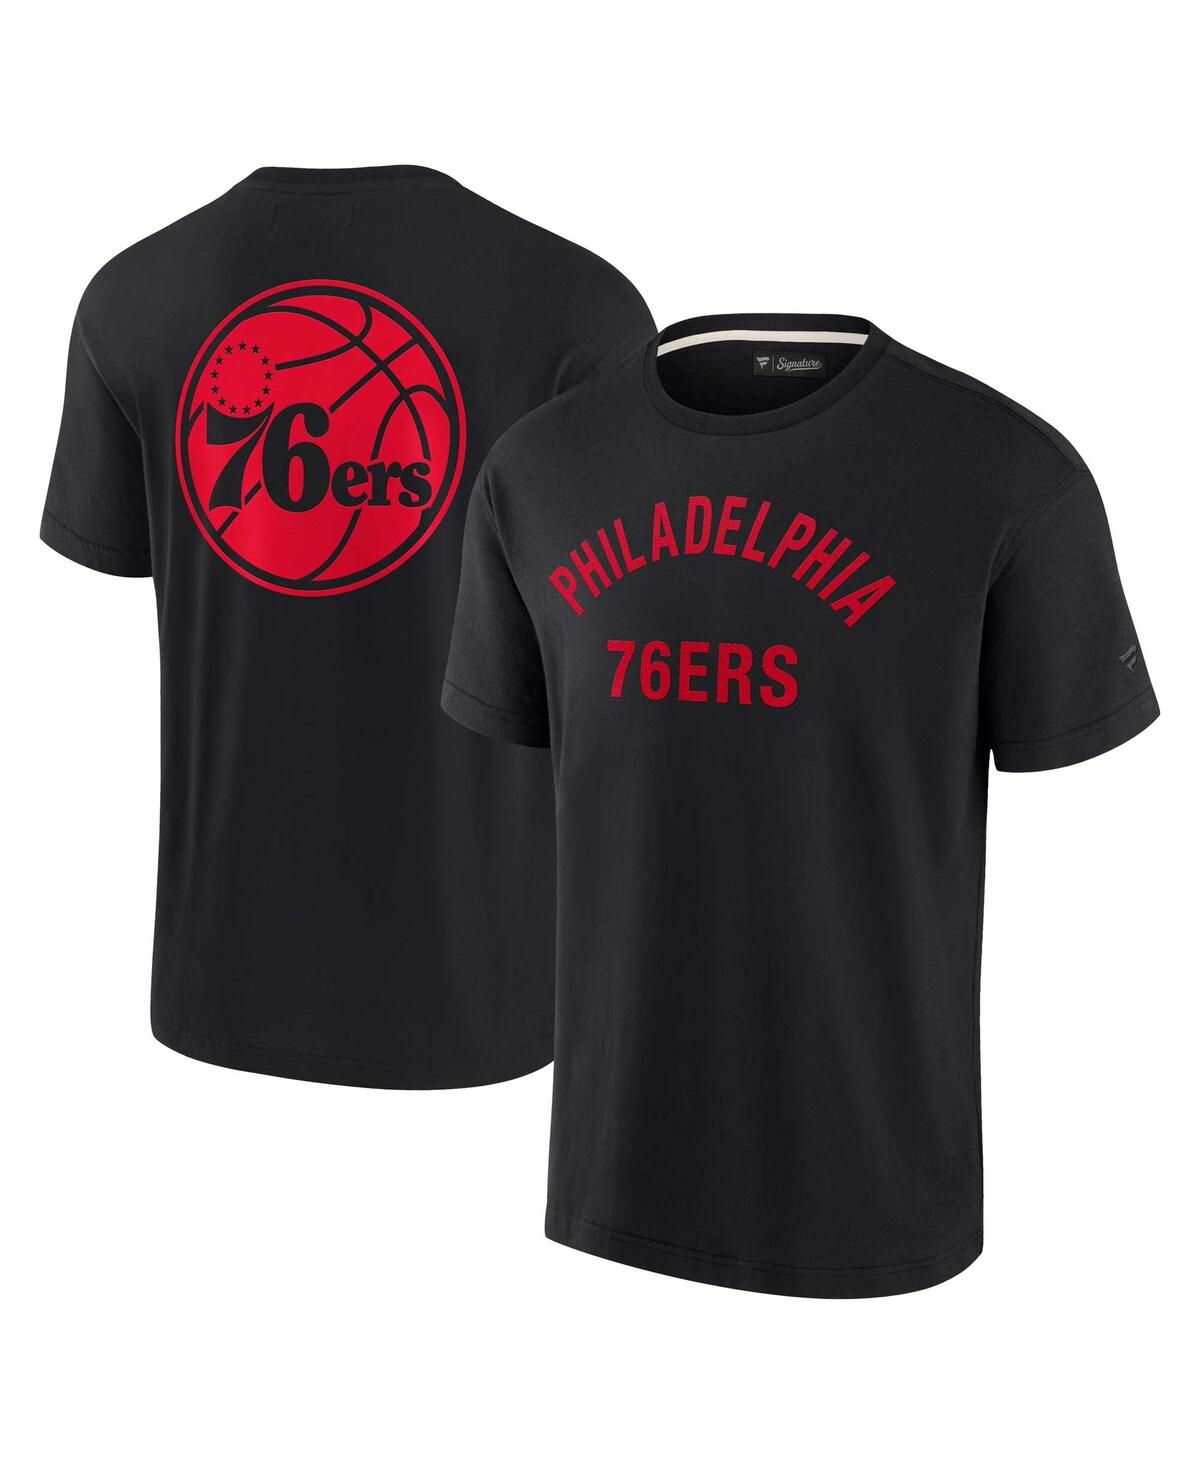 Men's and Women's Fanatics Signature Black Philadelphia 76ers Super Soft T-shirt - Black